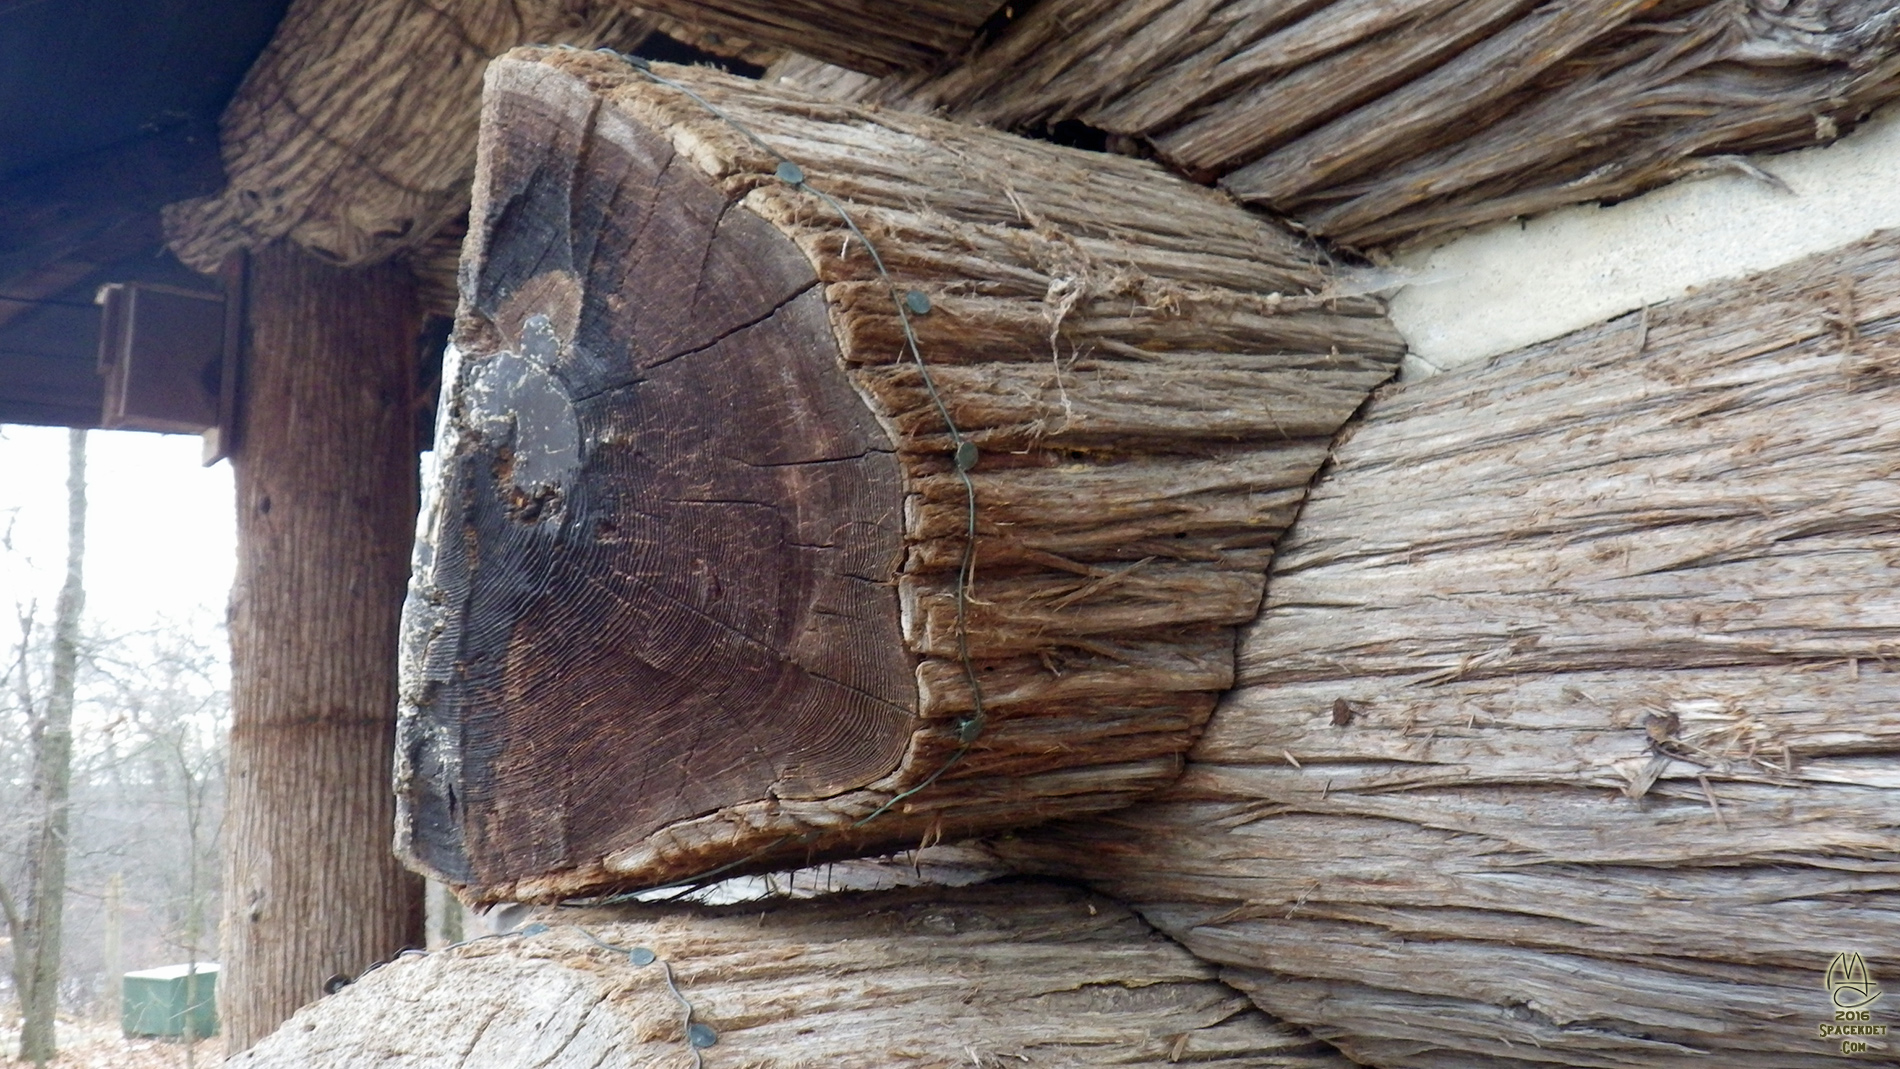 Cedar bark, nail and wire detail.